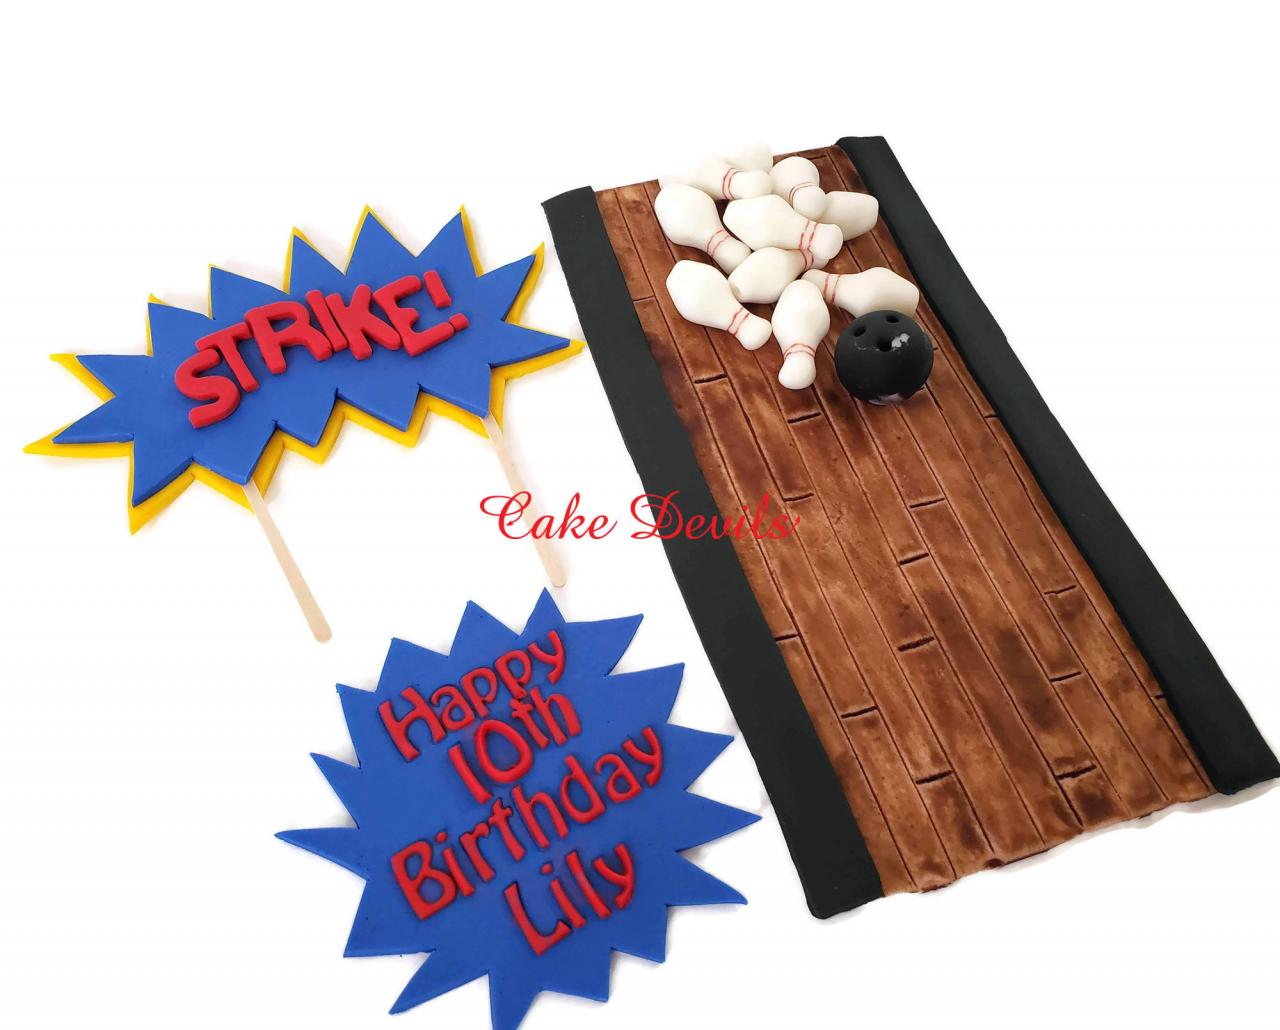 Bowling Cake Toppers - Fondant Bowling Theme Cake Topper Kit- Handmade Edible Bowling Ball, Bowling Pins, Bowling Cake Decorations